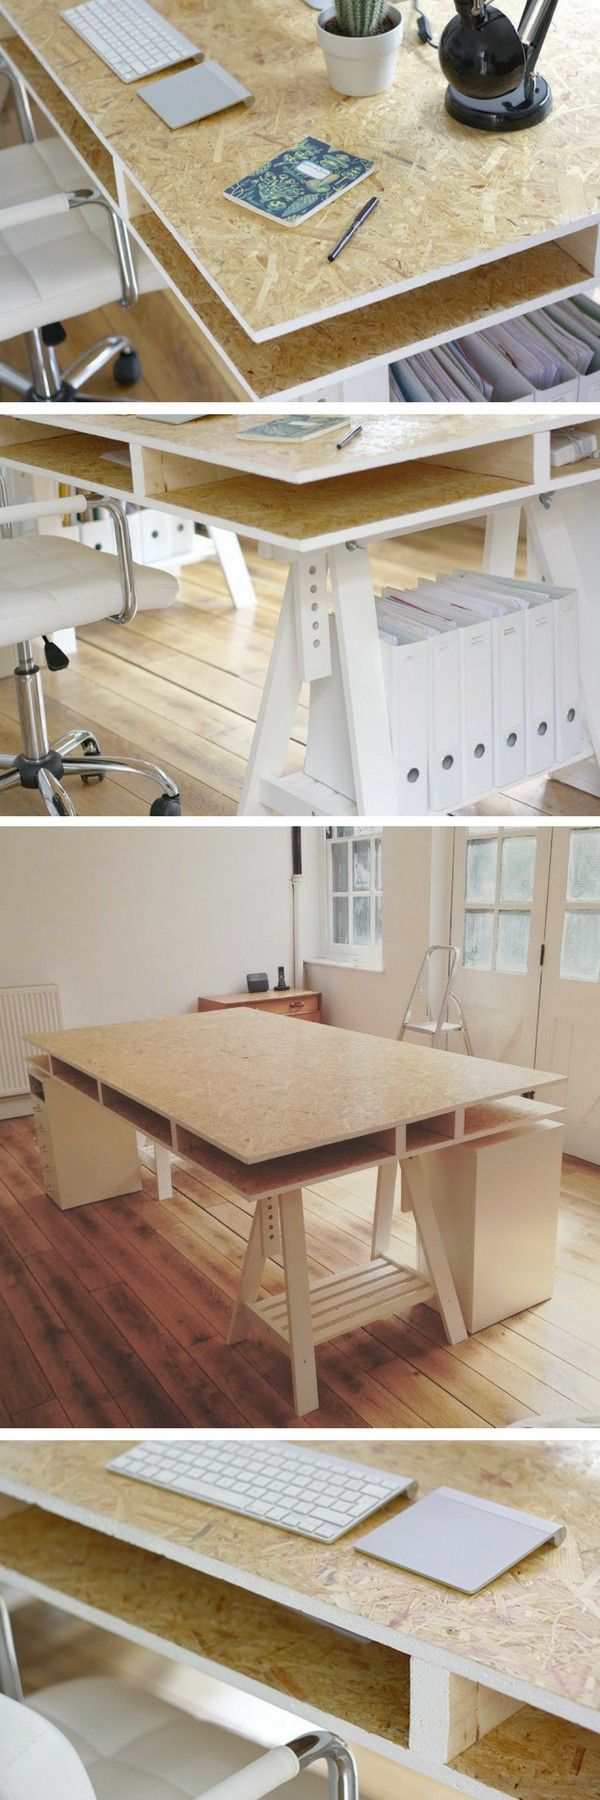 DIY Desks You Can Build on a Budget